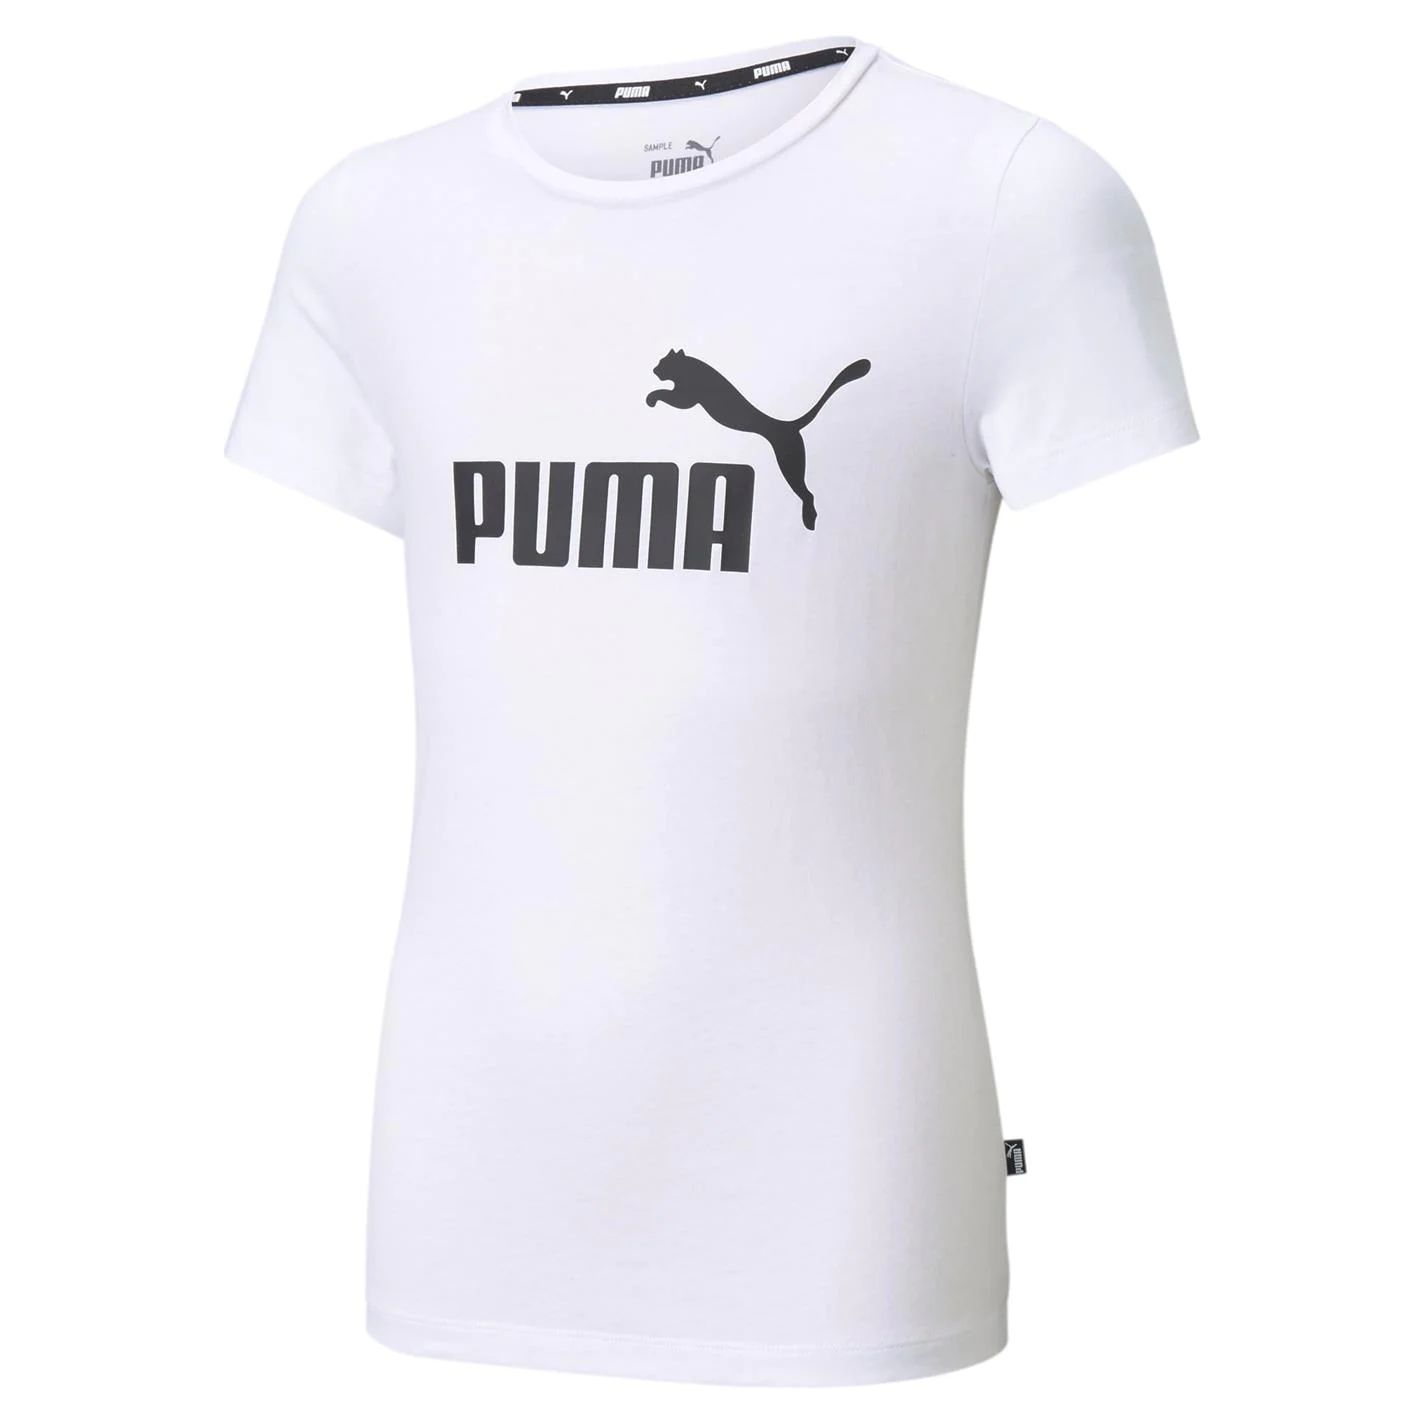 dětské tričko PUMA - WHITE/BLACK - 140 9-10 let